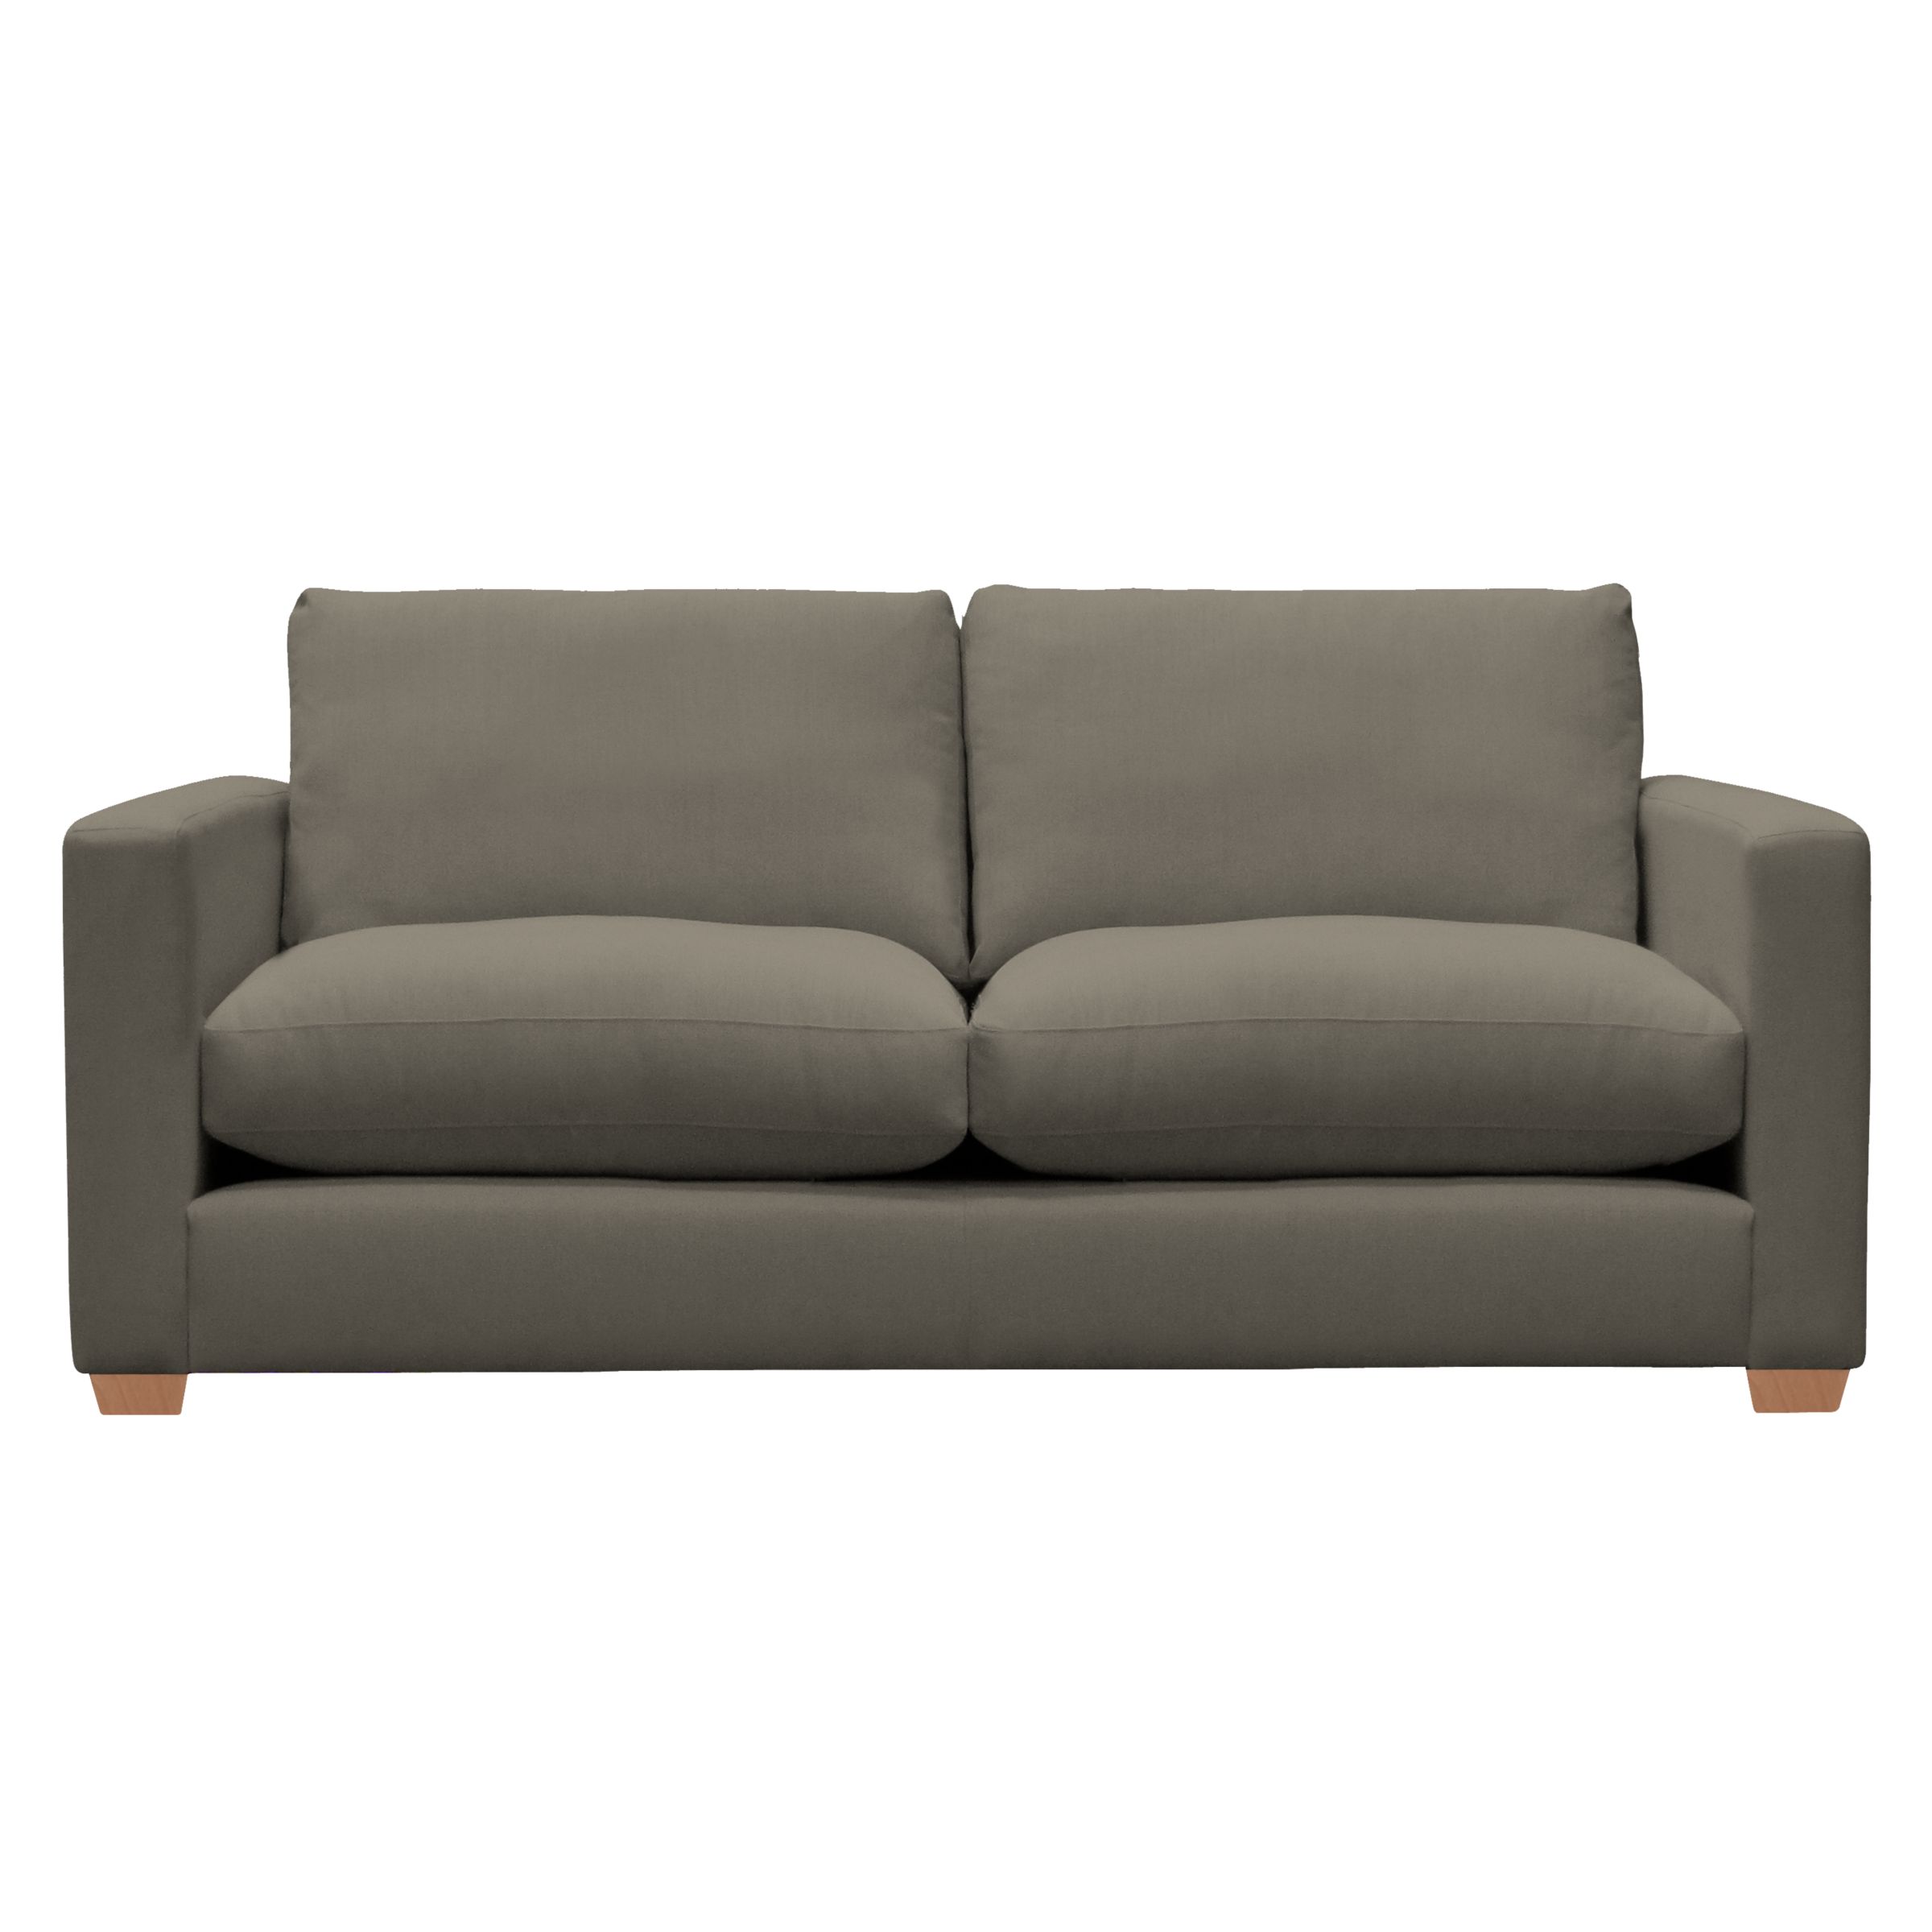 John Lewis Options Slim Arm Large Sofa, Linley Slate, width 187cm